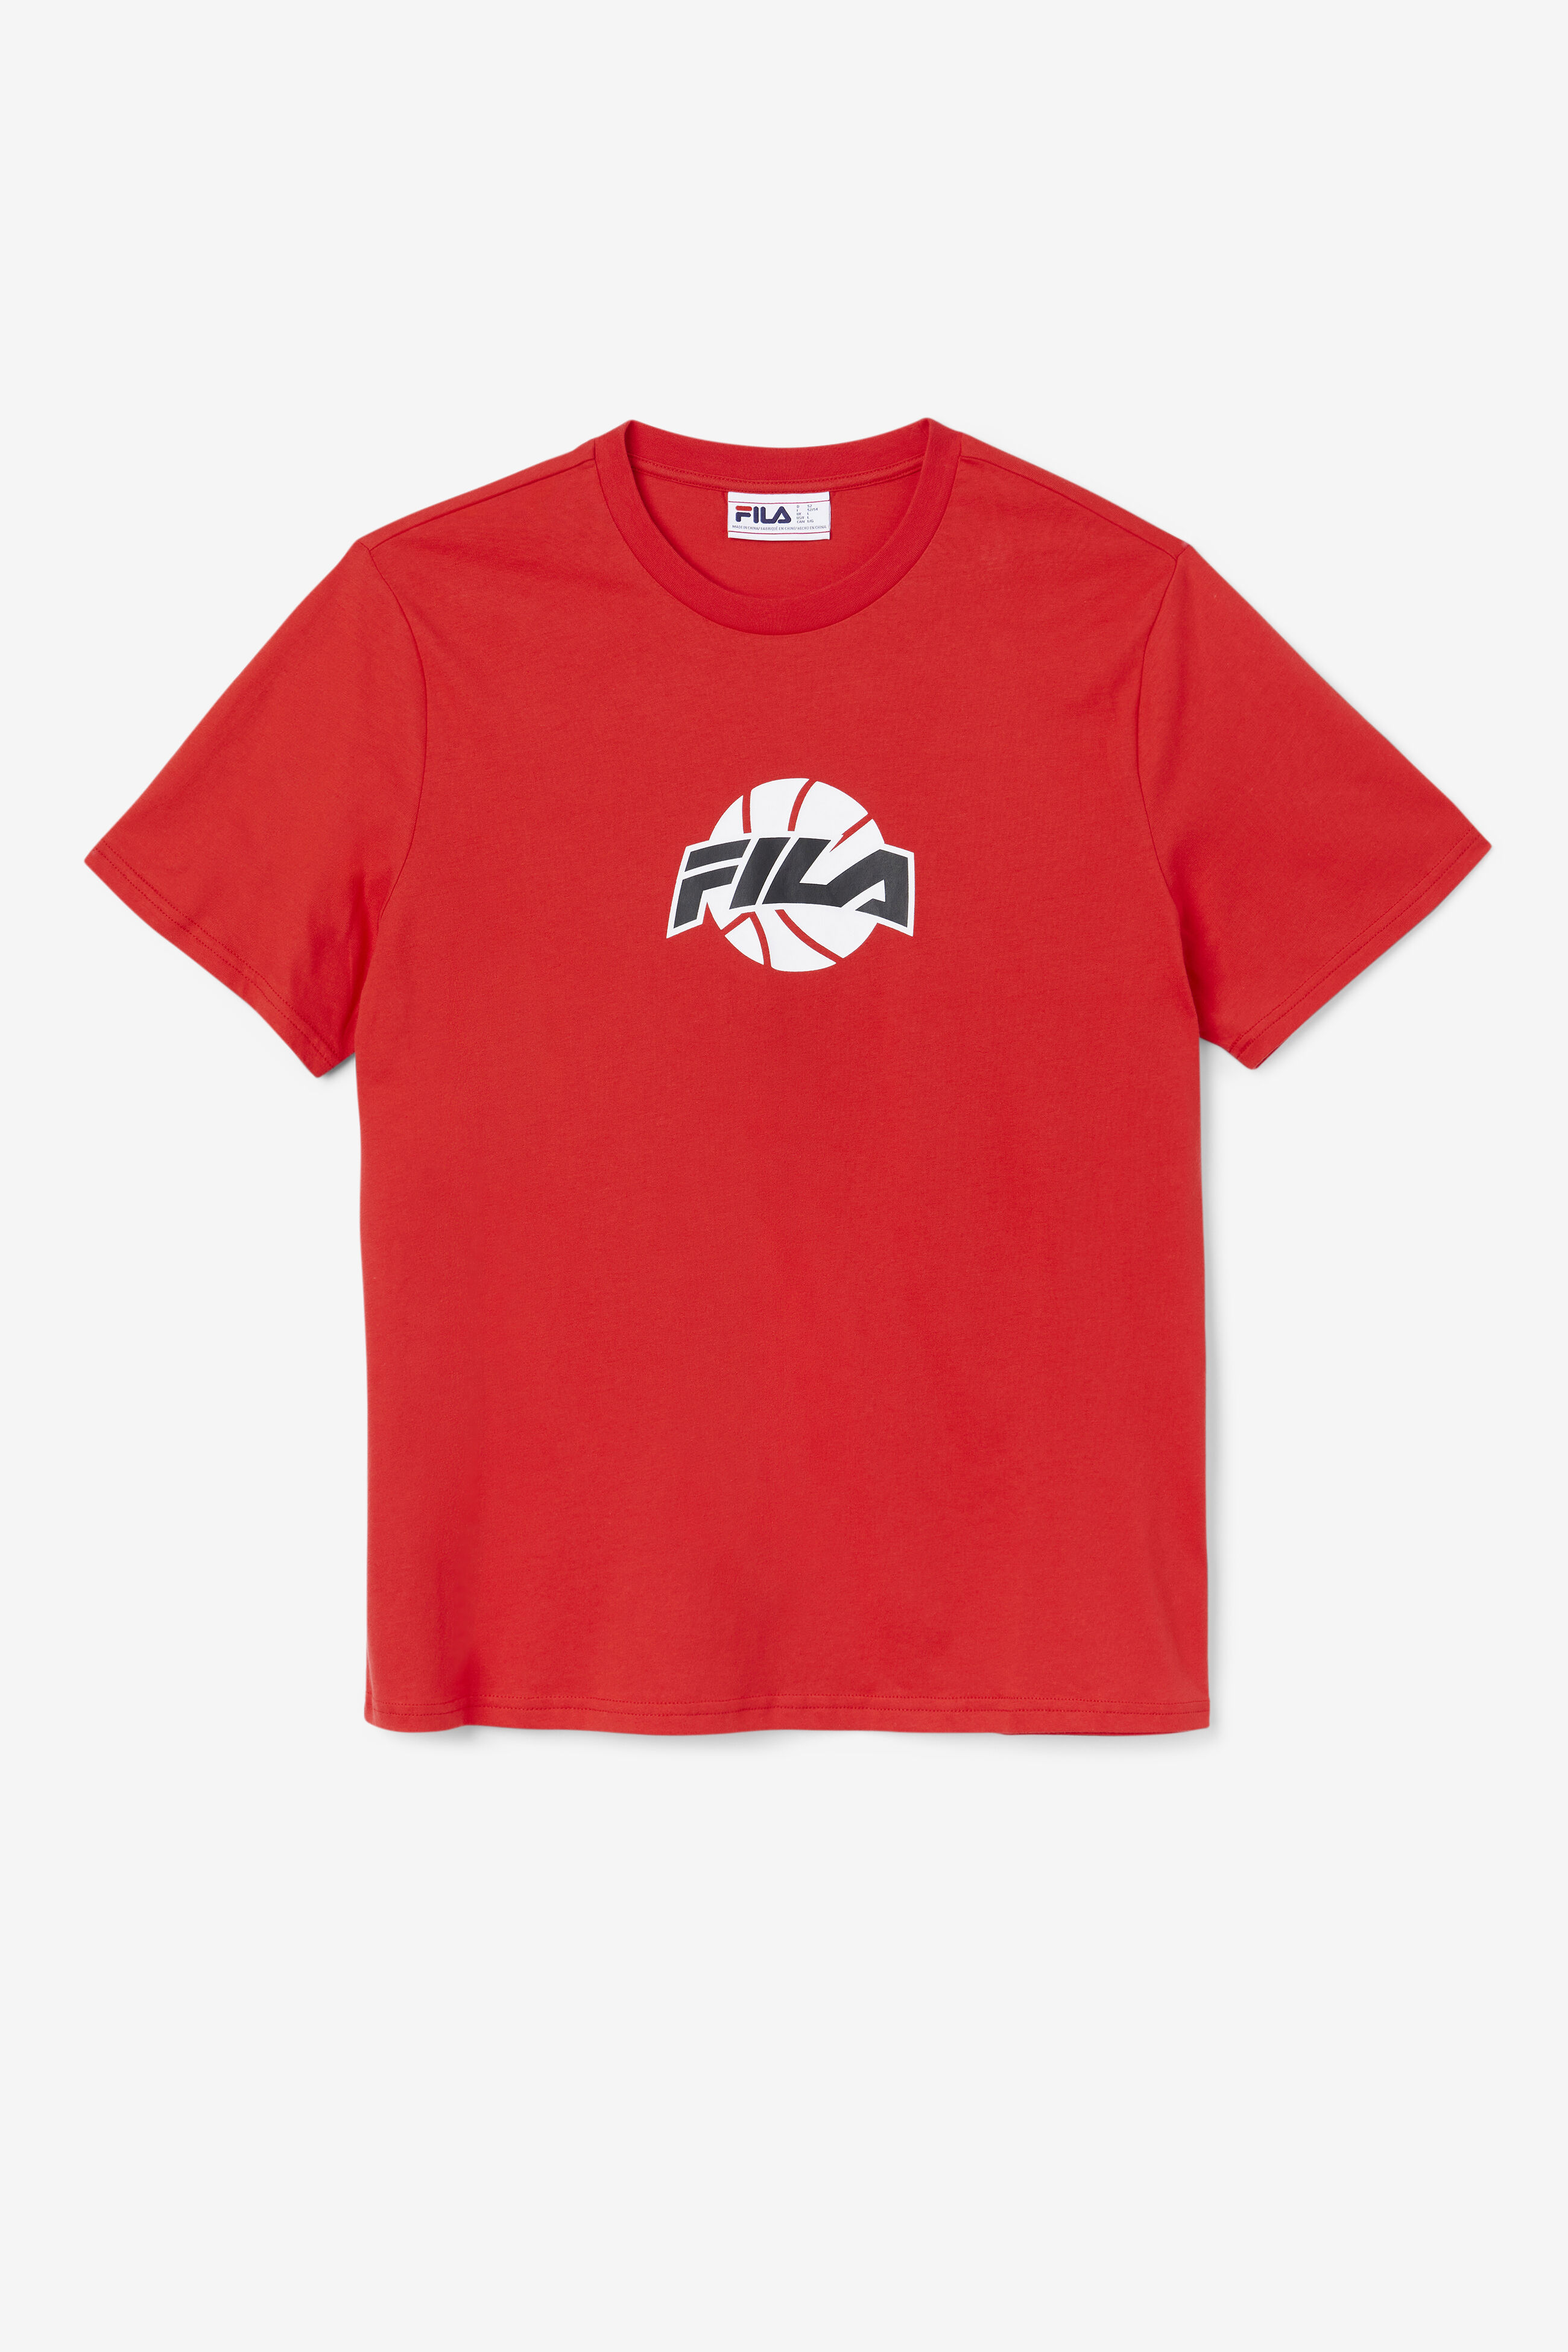 Nomi Men's Basketball Tee Shirt | Fila LM23C616